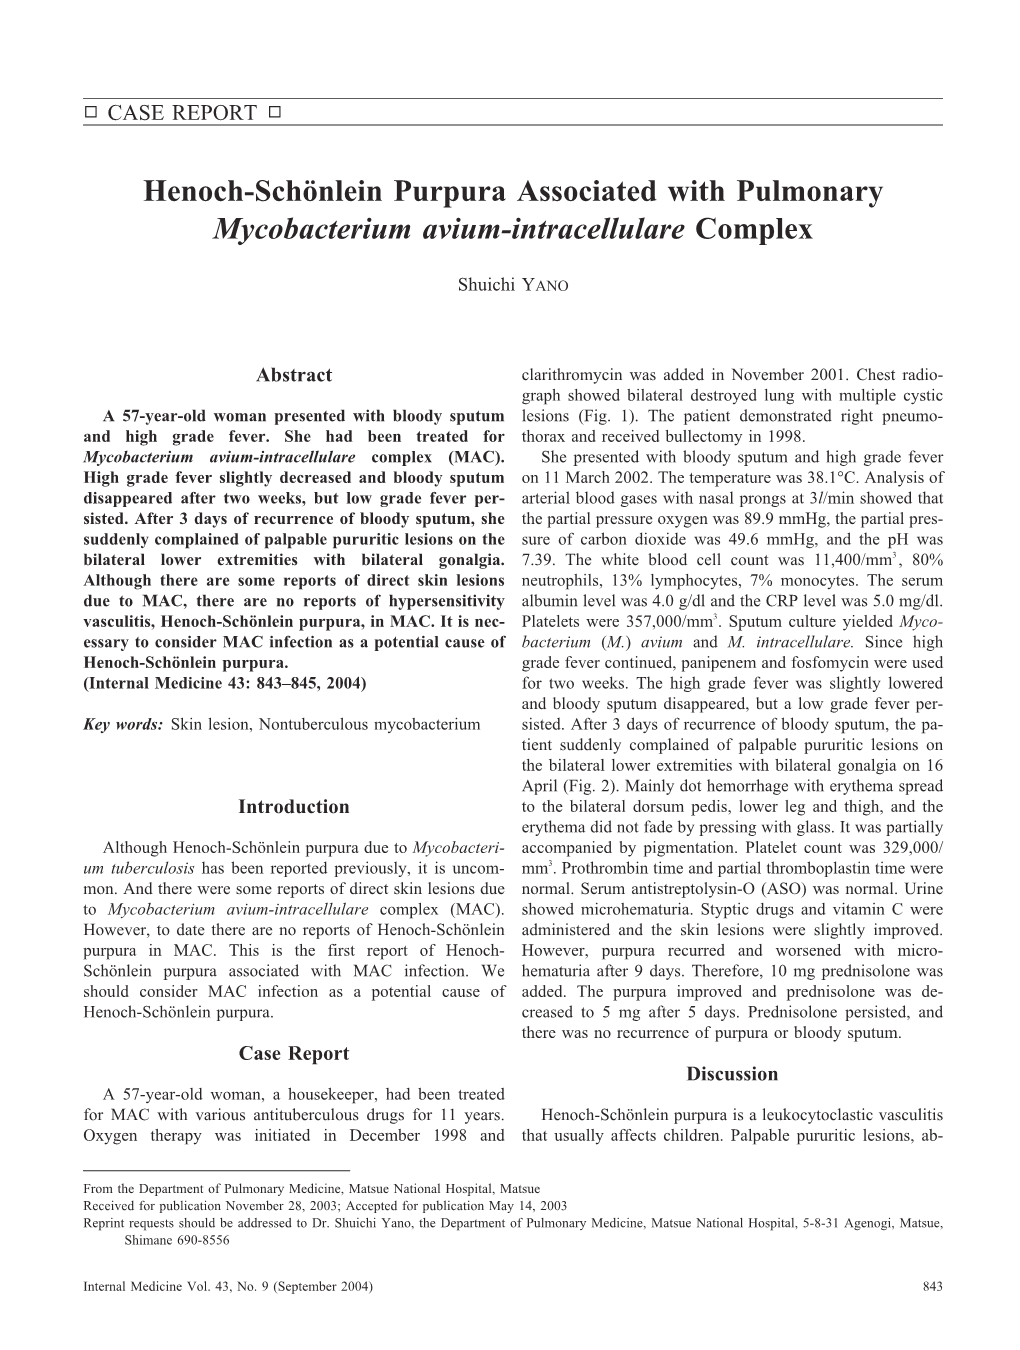 Henoch-Schönlein Purpura Associated with Pulmonary Mycobacterium Avium-Intracellulare Complex